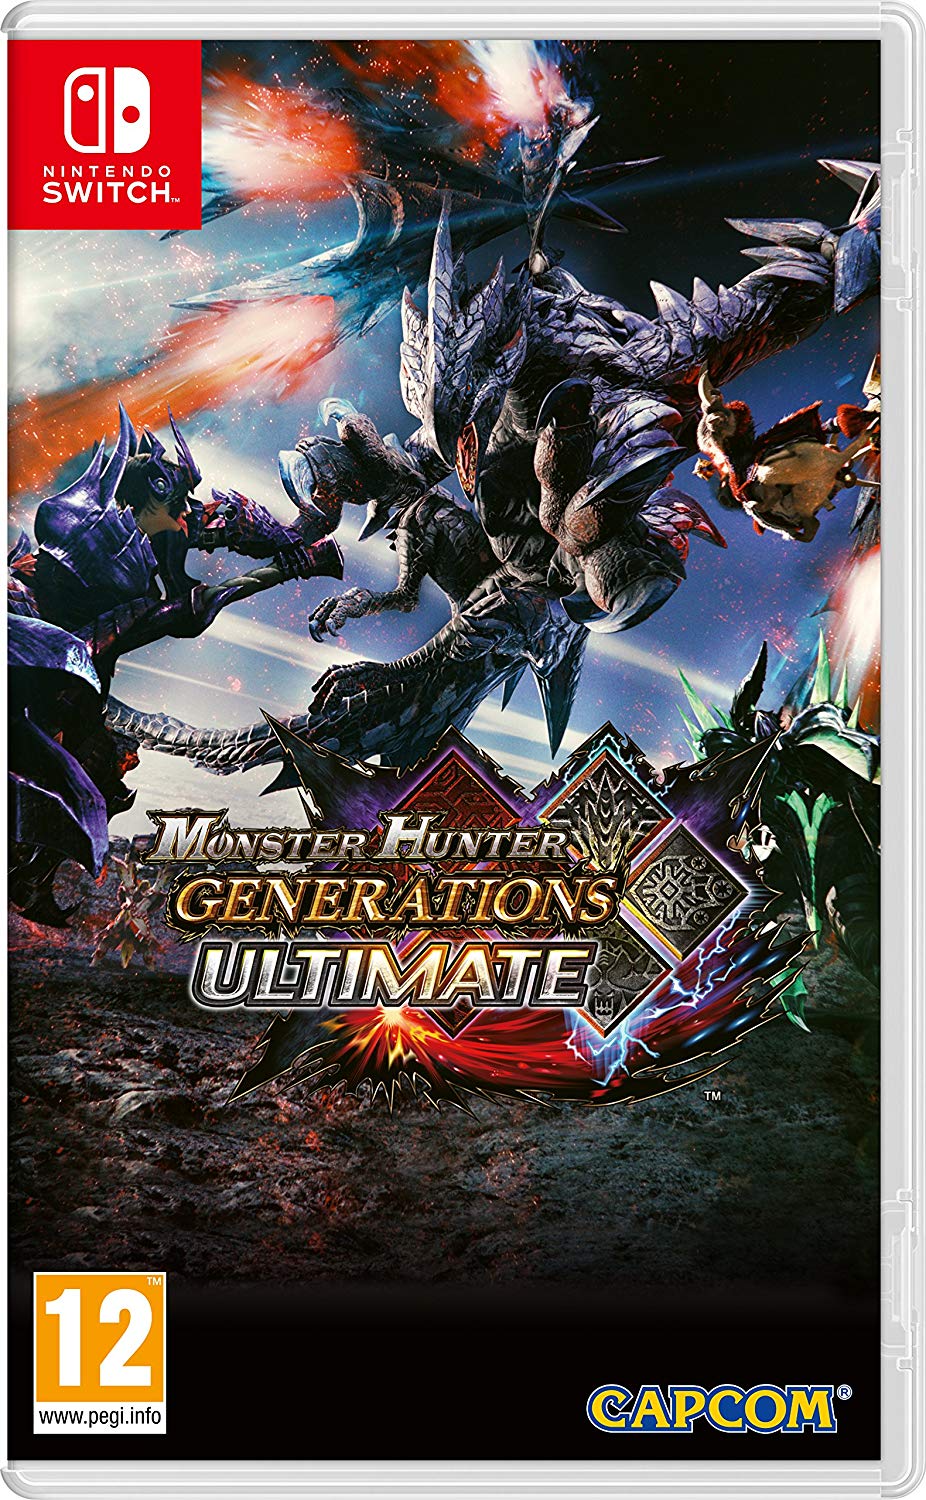 Monster Hunter Generations Ultimate (Nintendo Switch) - Offer Games